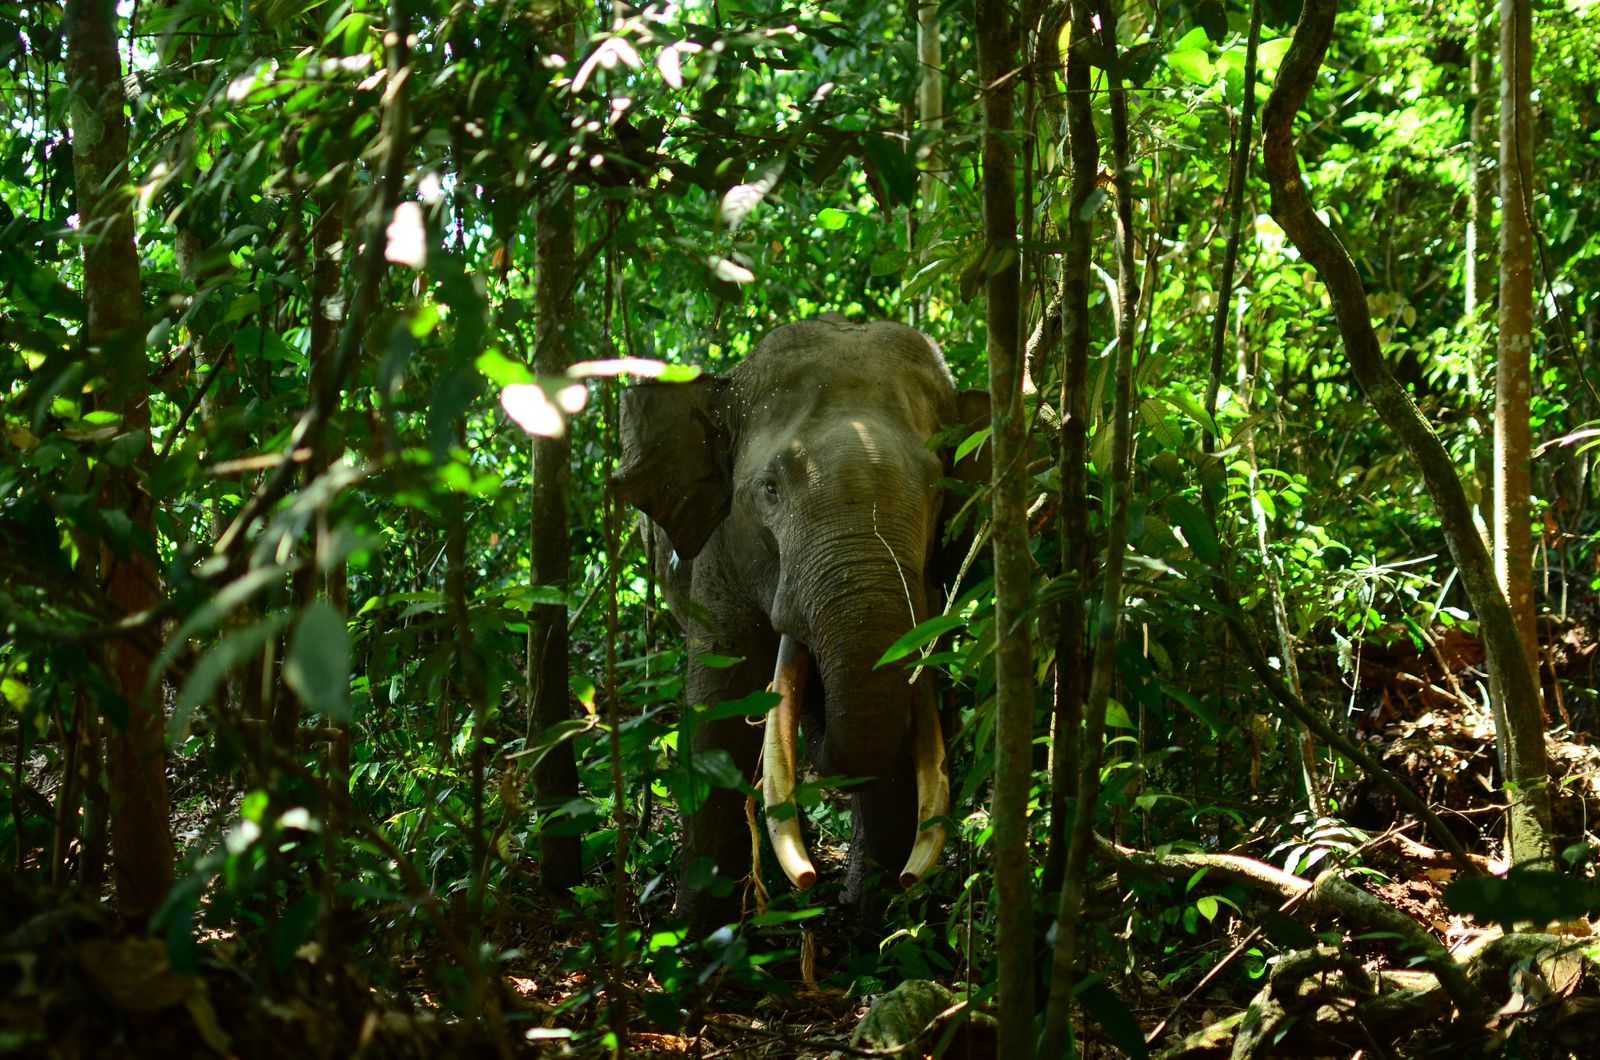 Gajah Rahman semasa hidup. Ia menjadi gajah jinak yang membantu petugas dalam mitigasi konflik gajah liar dan masyarakat. | Rahmi Carolina/Mongabay Indonesia